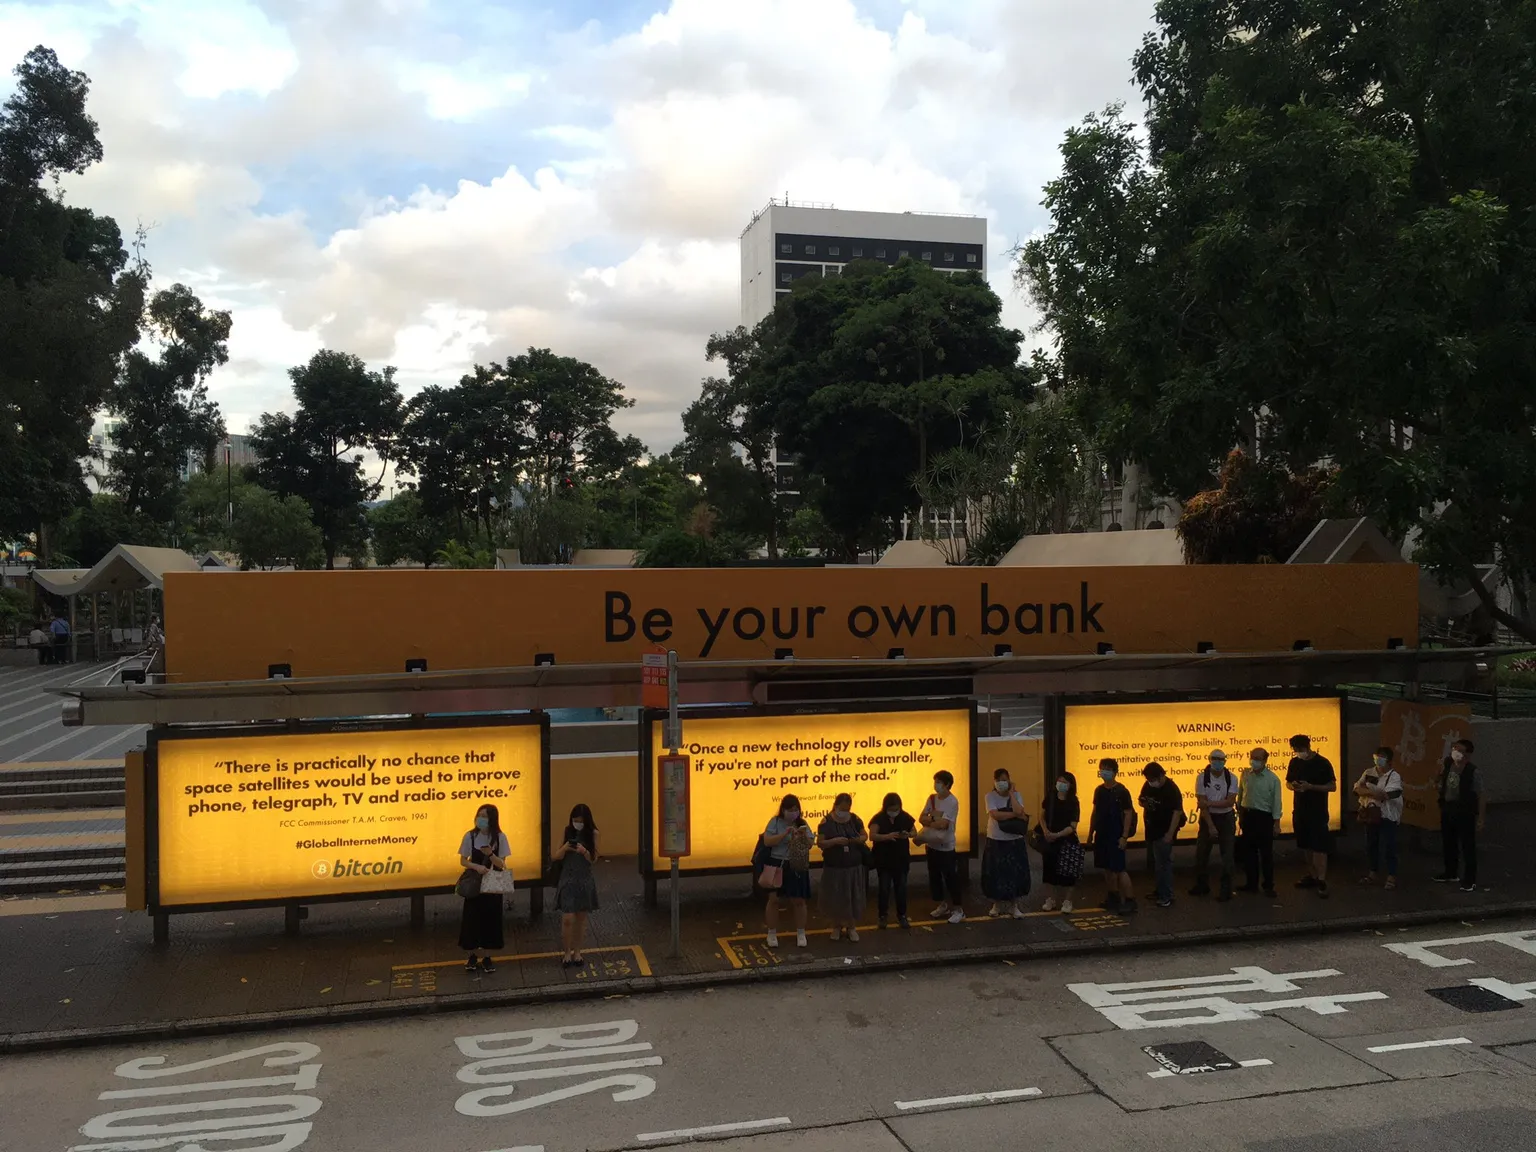 Anuncios de Bitcoin en el distrito bancario de Hong Kong. Imagen: BAHK